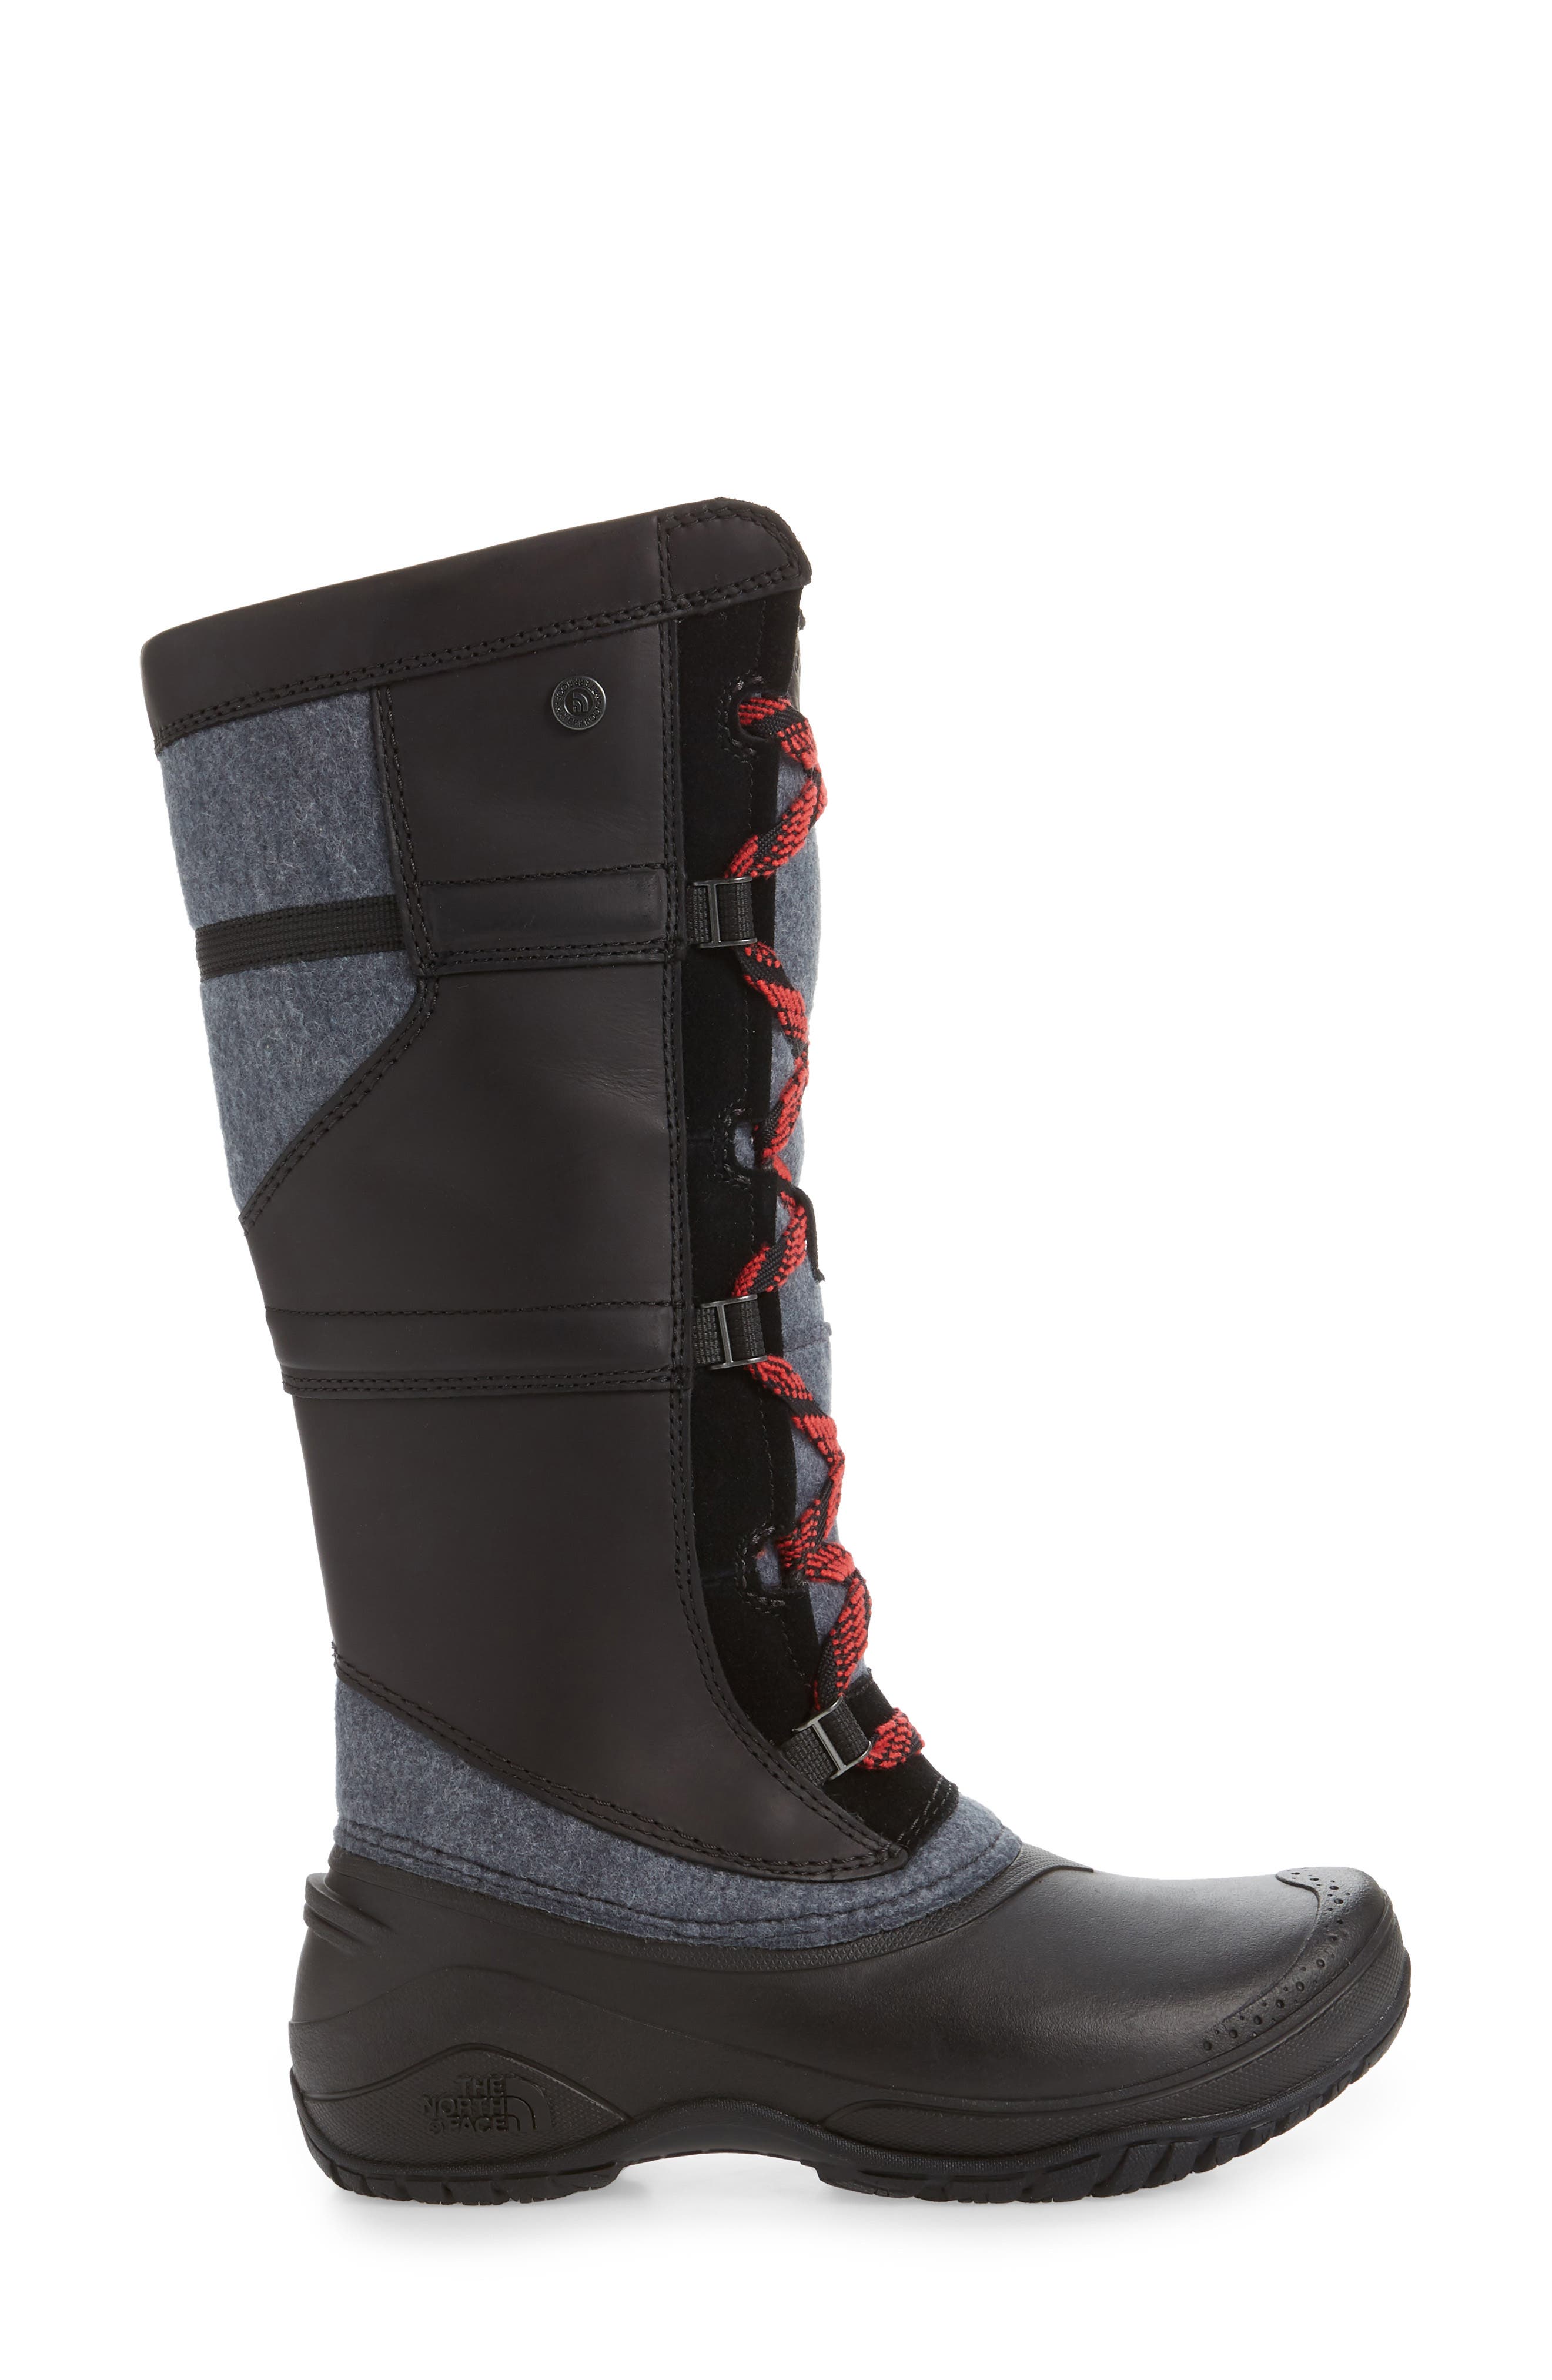 shellista waterproof insulated snow boot